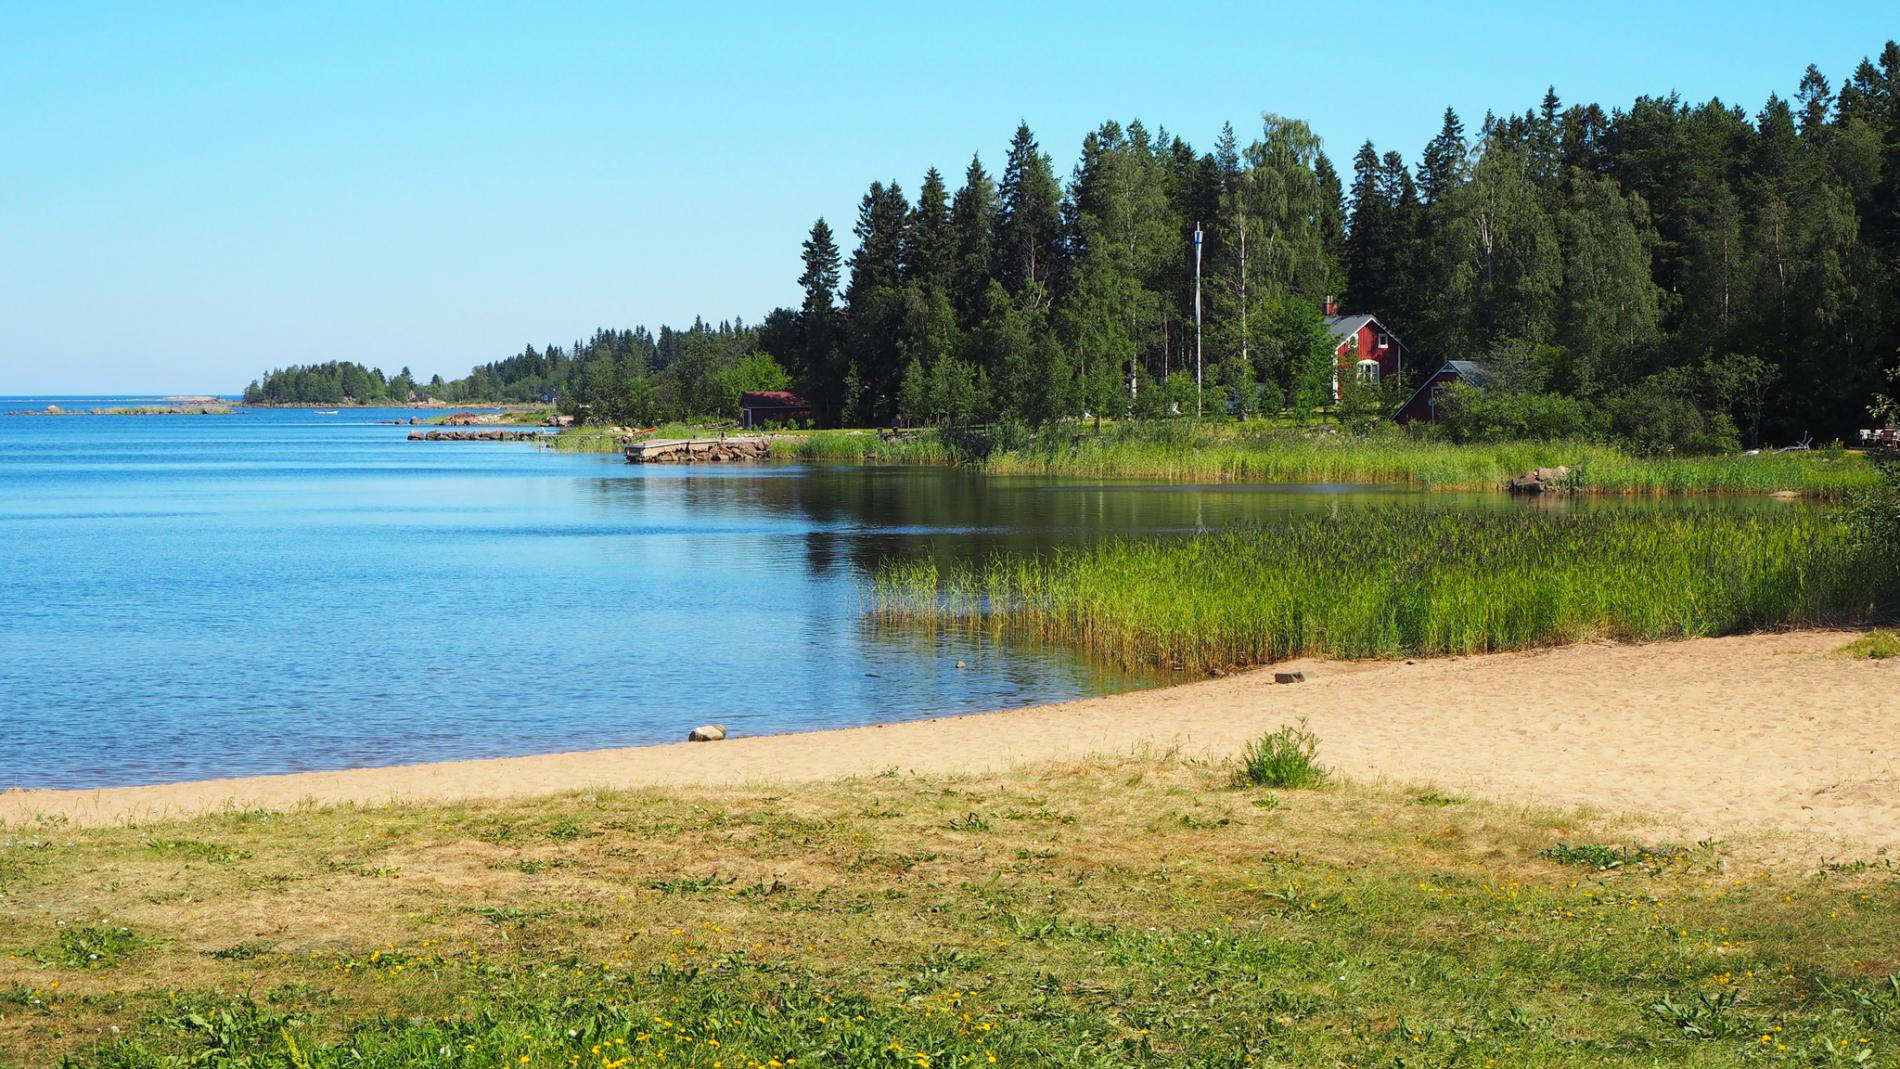 Kylmäniemi beach is sheltered and beautifully plain.